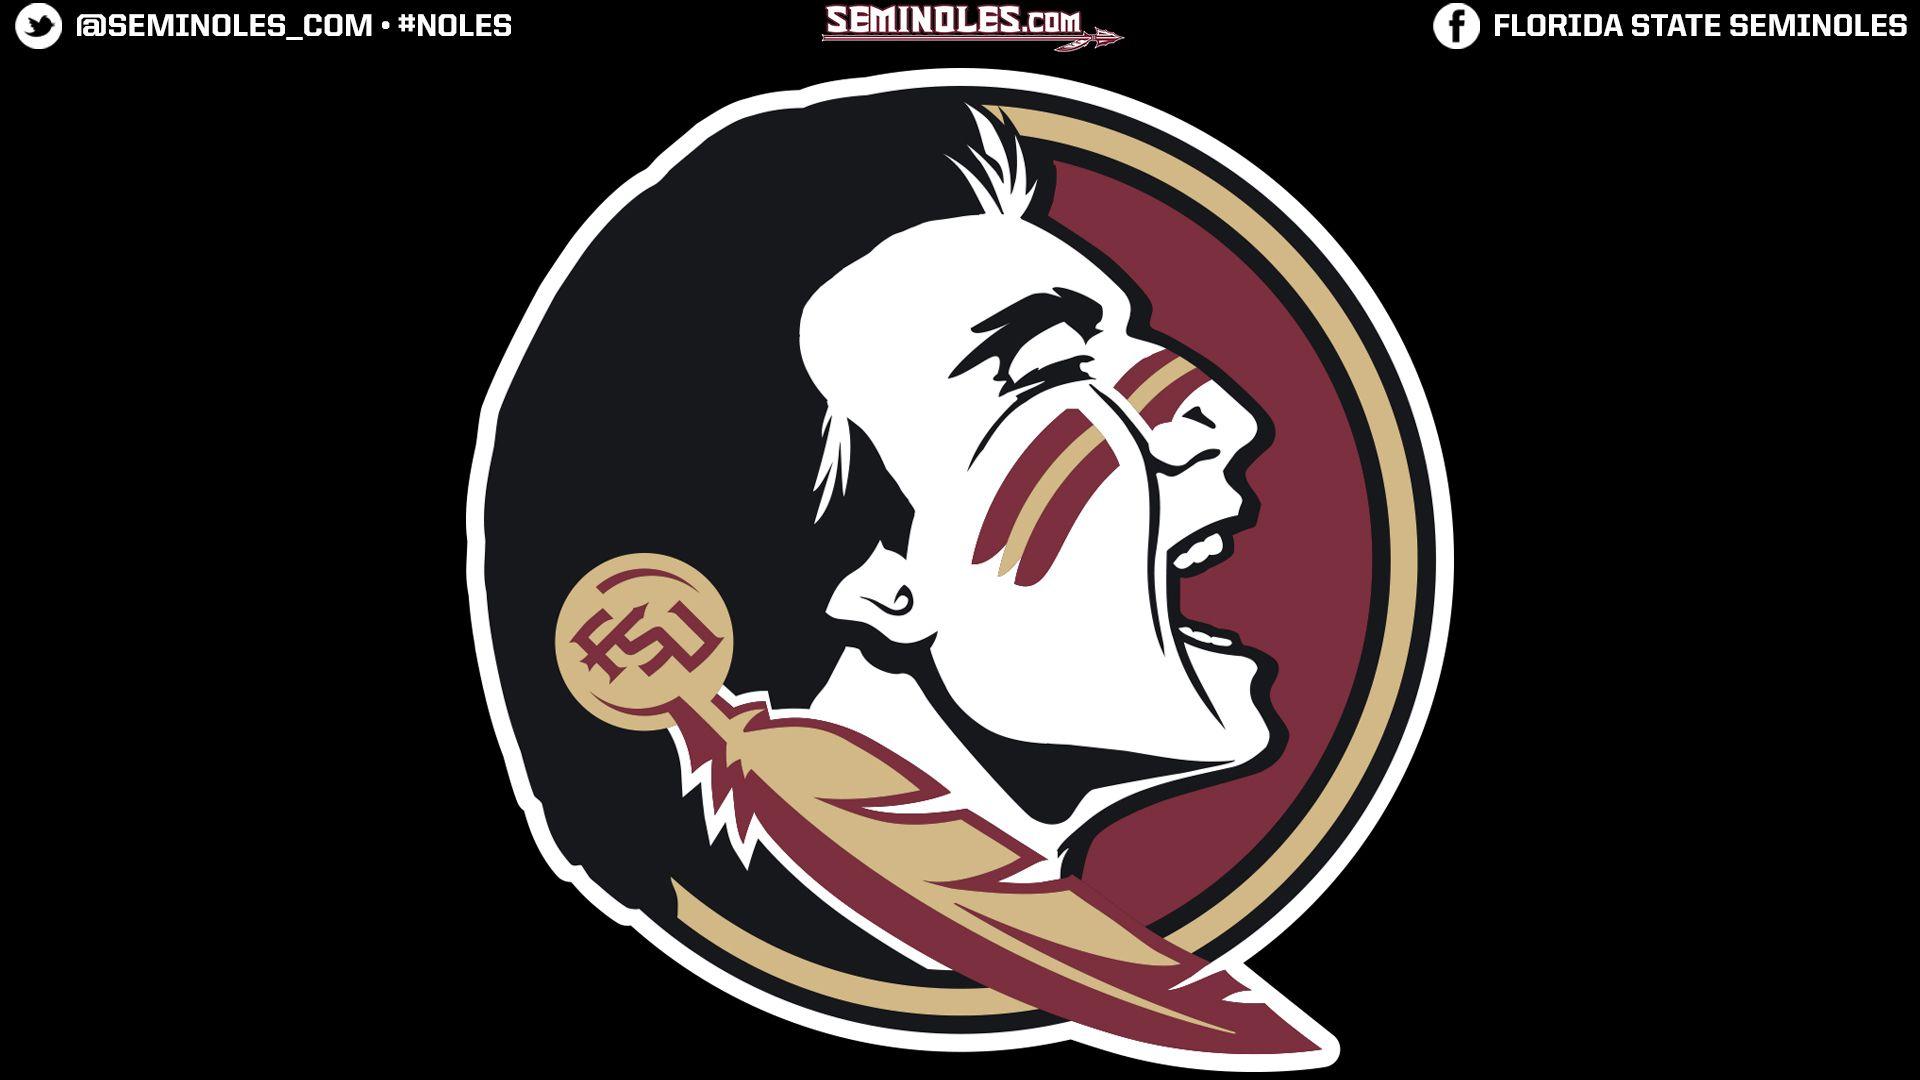 Florida State Seminoles Logo - Seminoles.com Desktop Wallpapers